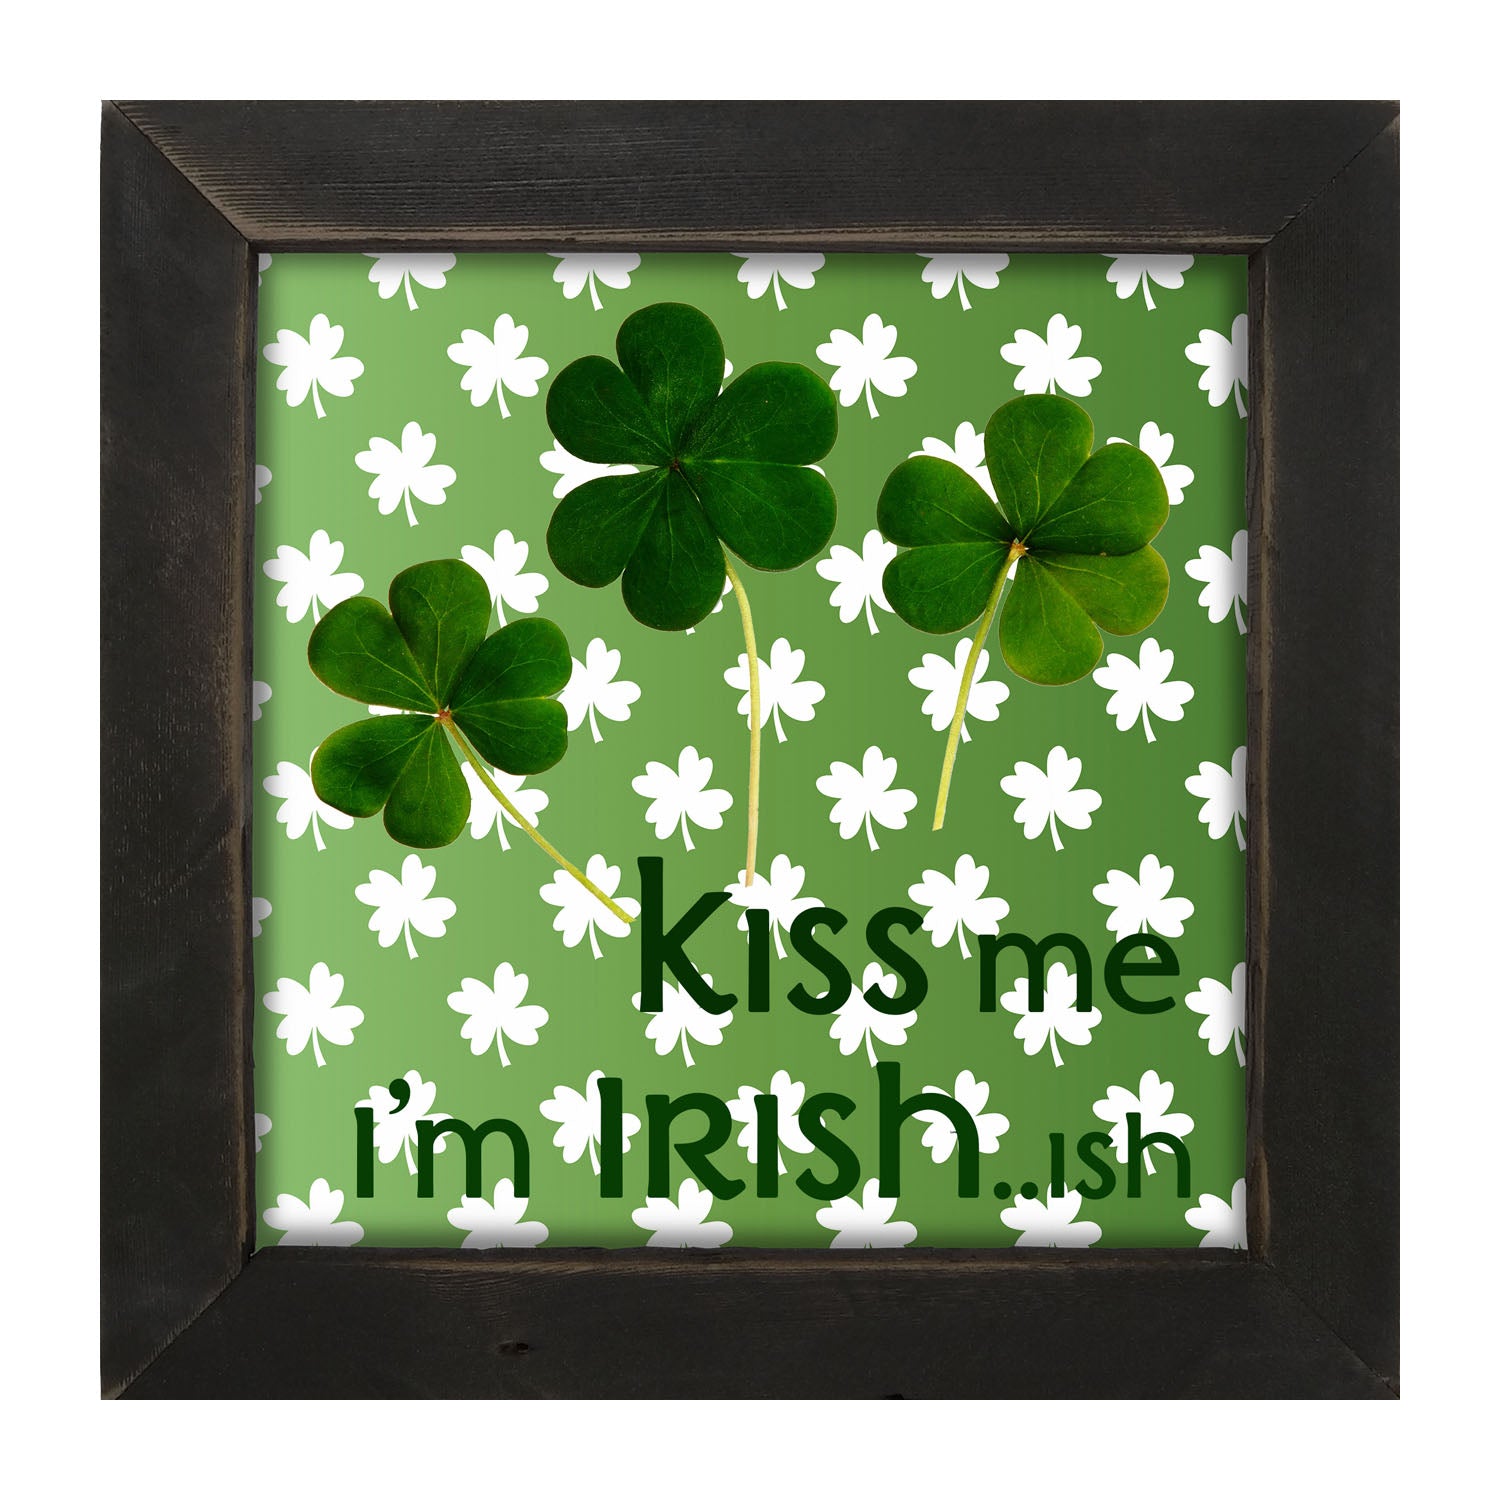 Kiss Me I'm Irish...ish